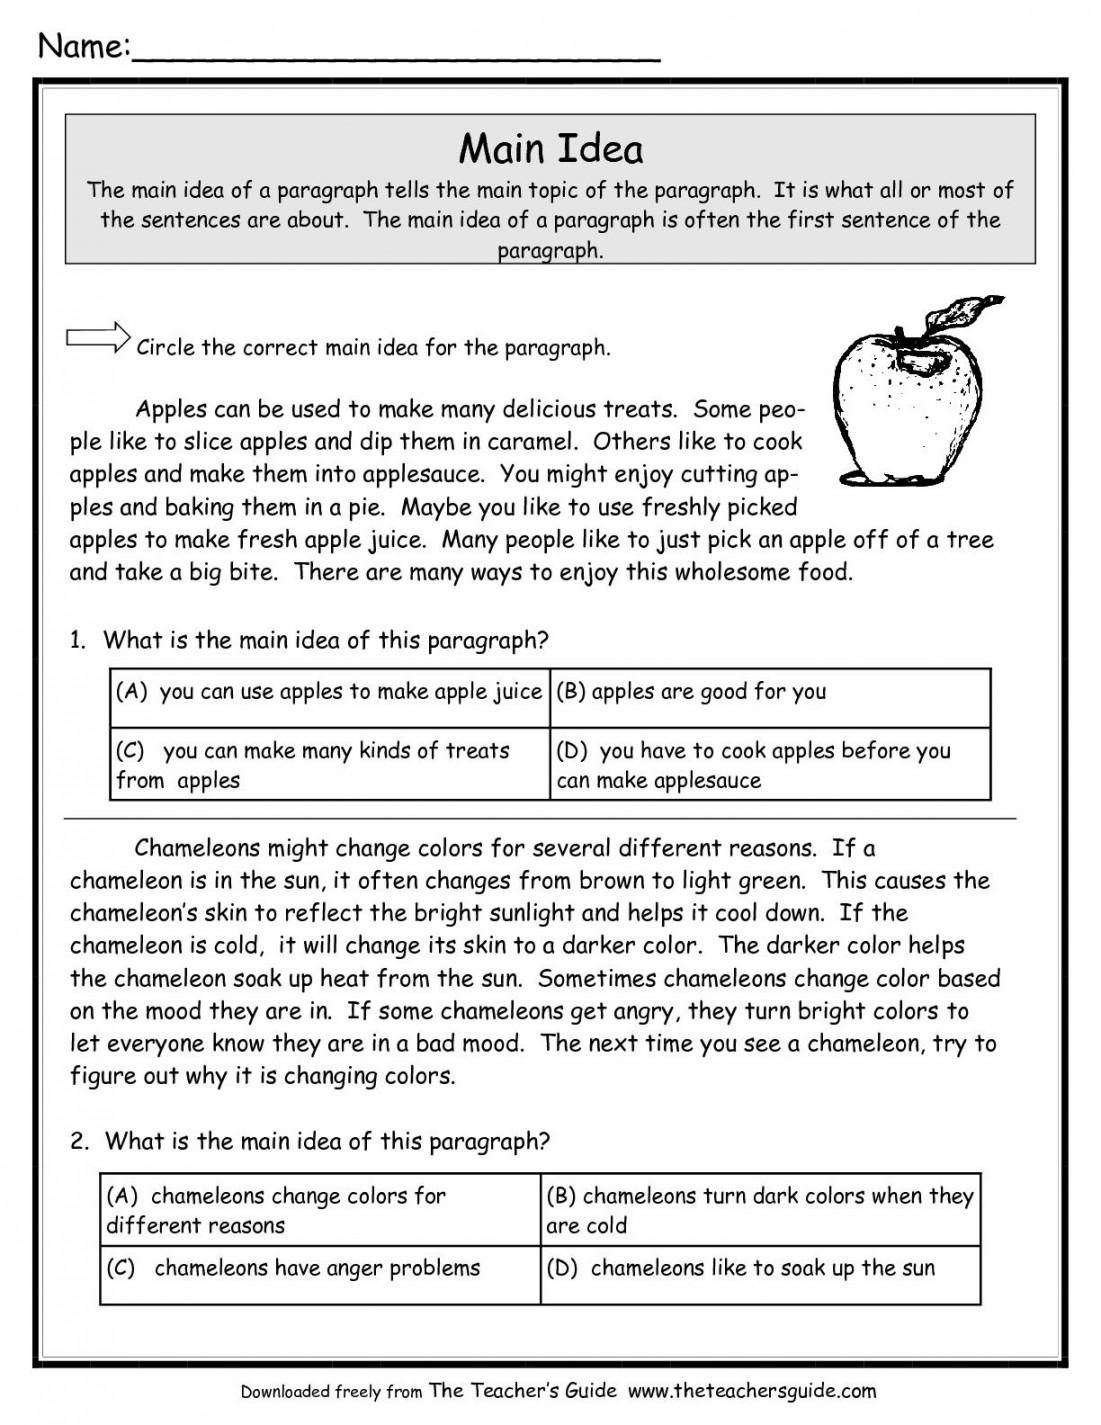 main idea worksheets from the teacher s main idea worksheet